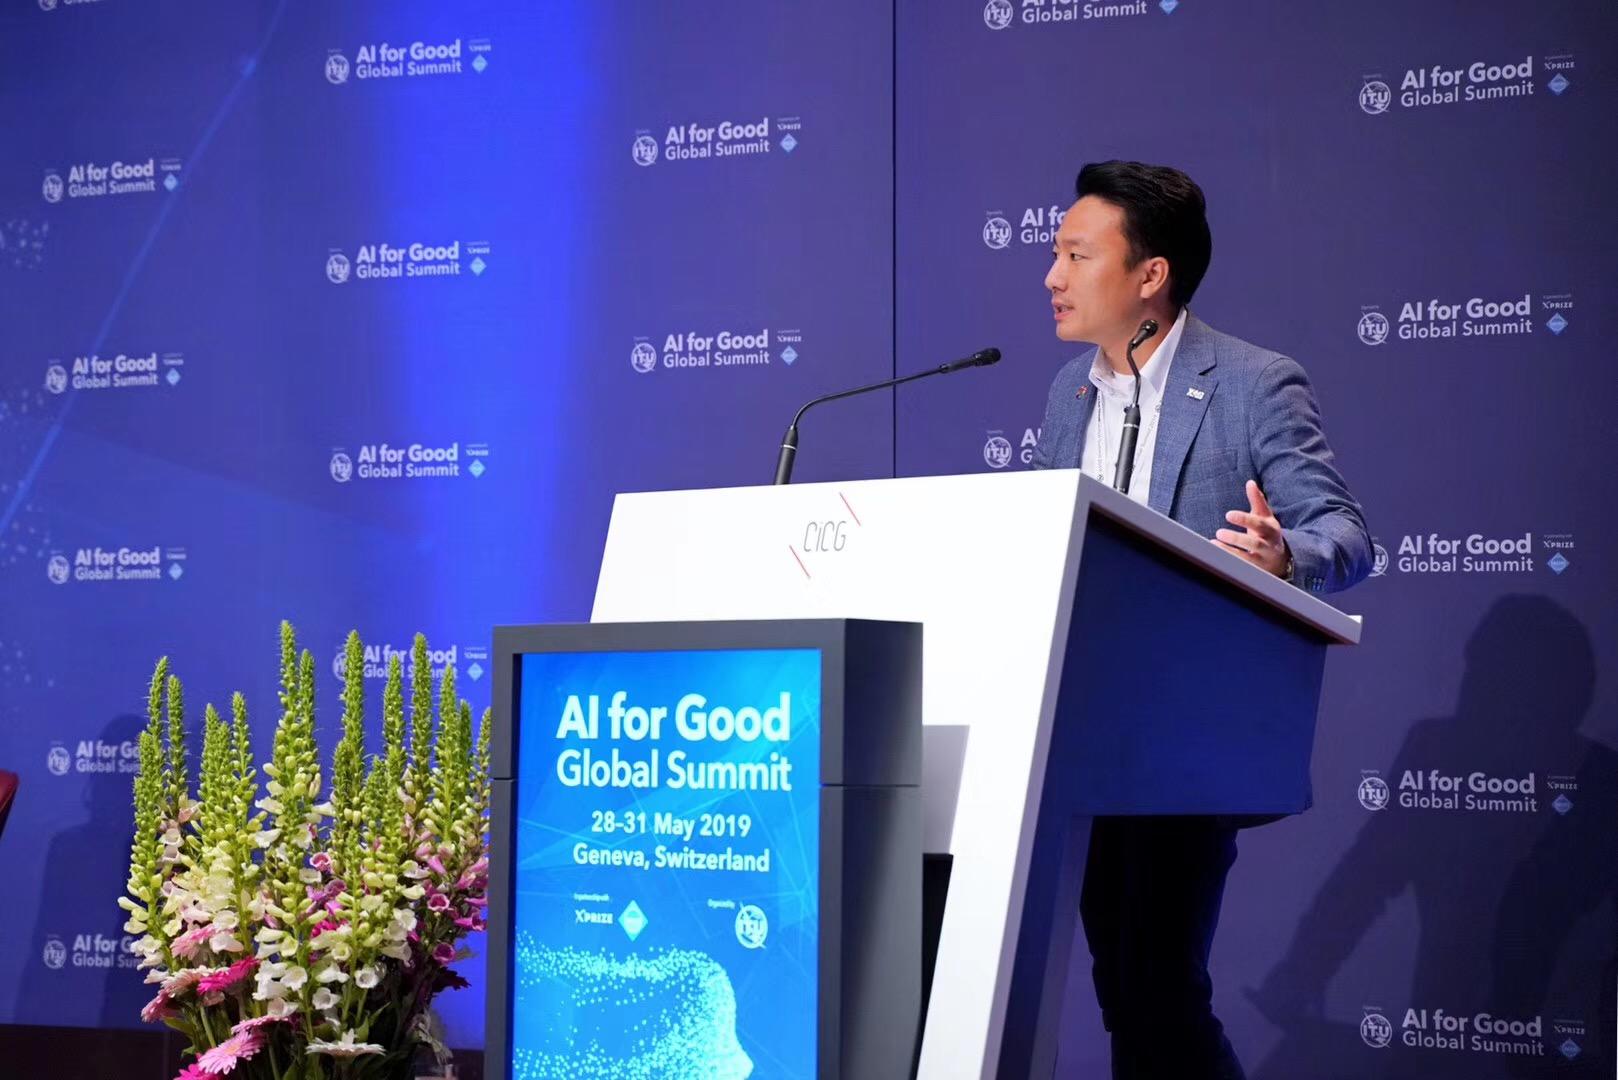 Justin Gong delivered a keynote speech